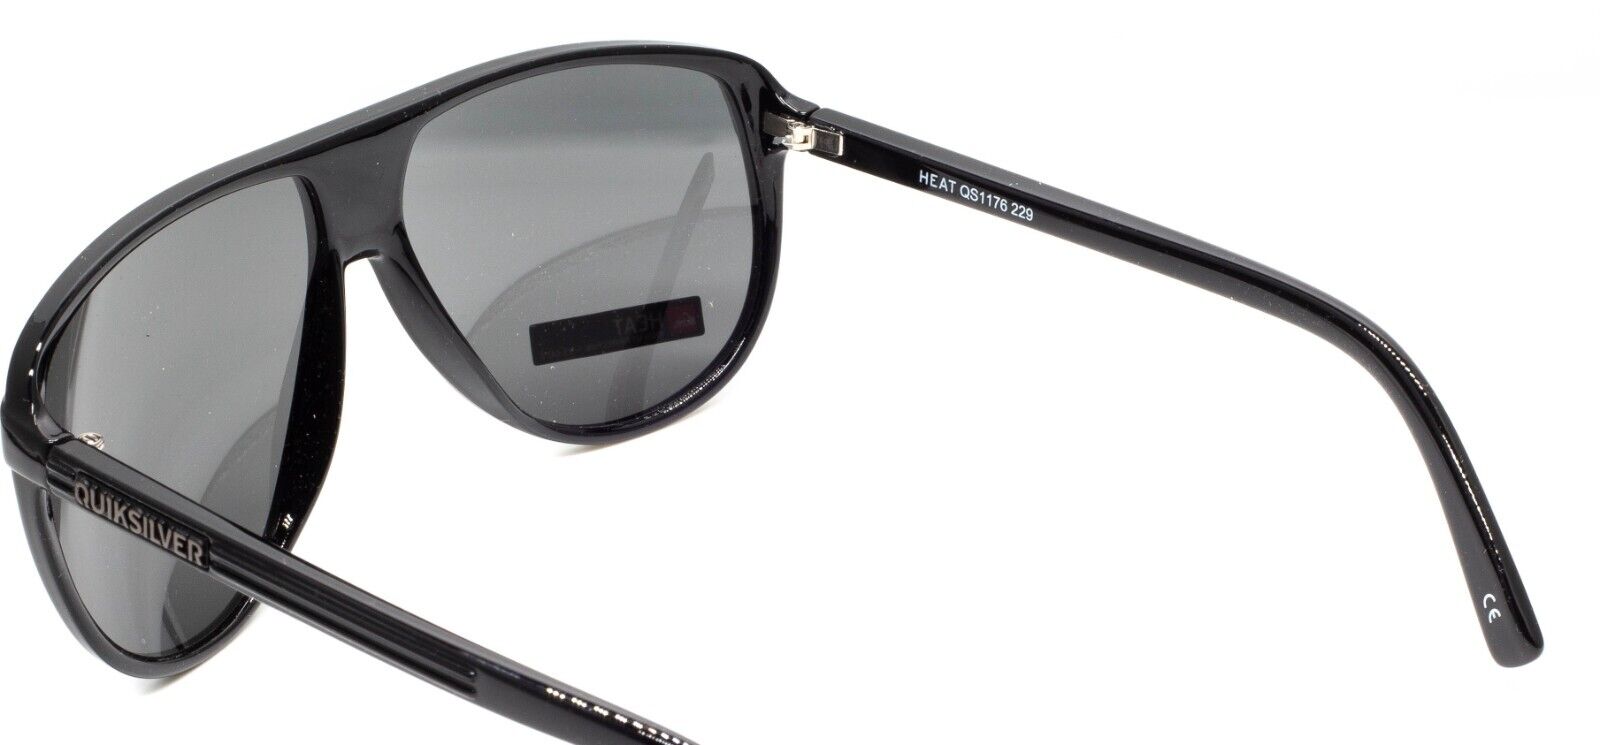 GGV QUIKSILVER 229 Glasses QS1176 Sunglasses Shades HEAT 4231441 - -Italy Eyewear Eyewear 59mm